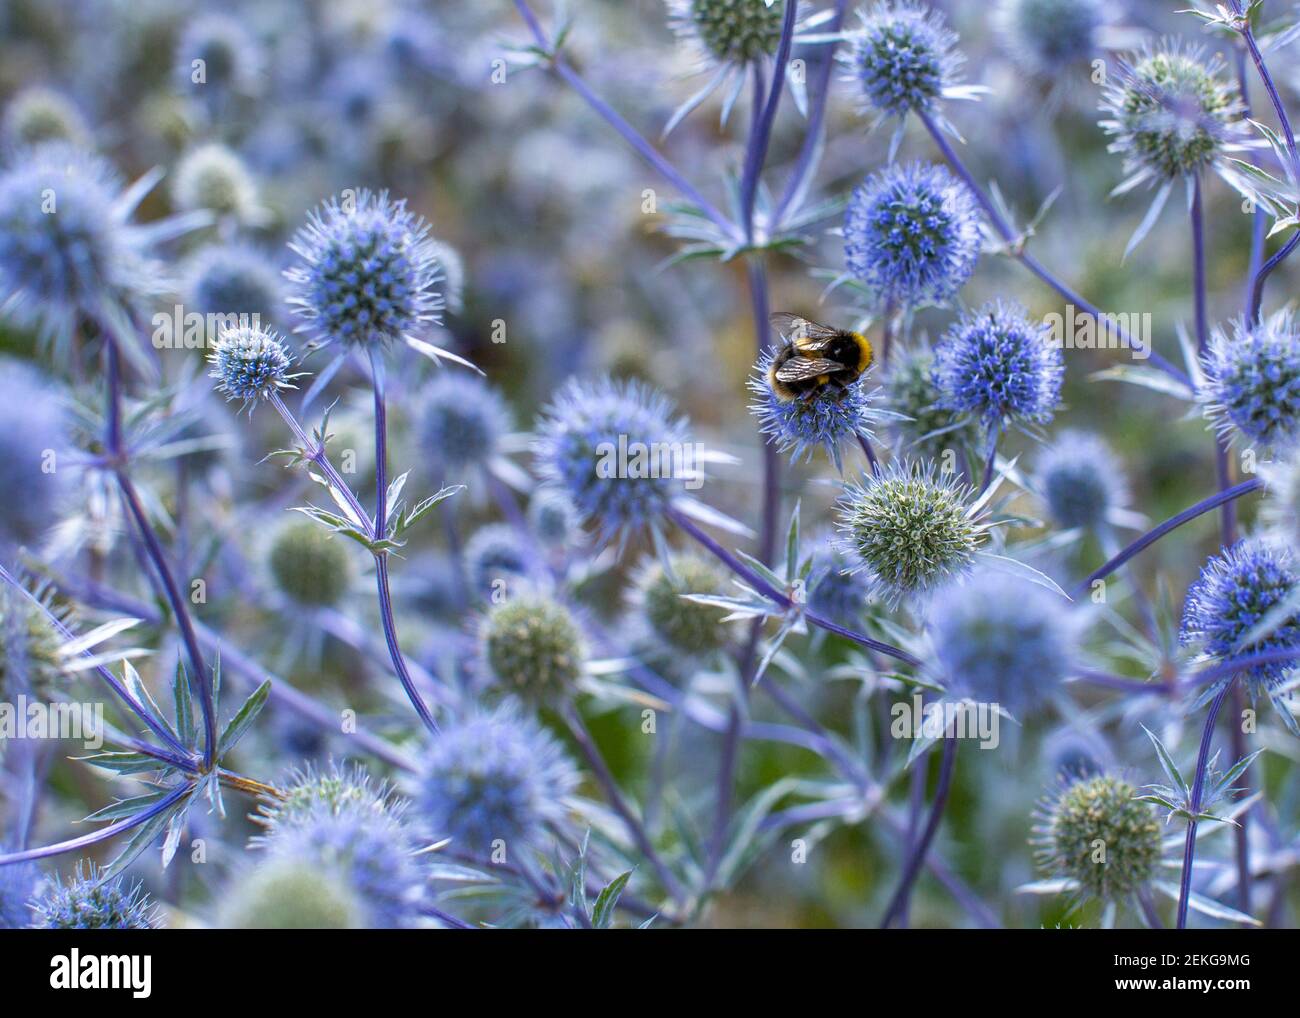 Bee on a globe thistle plant, England, UK Stock Photo